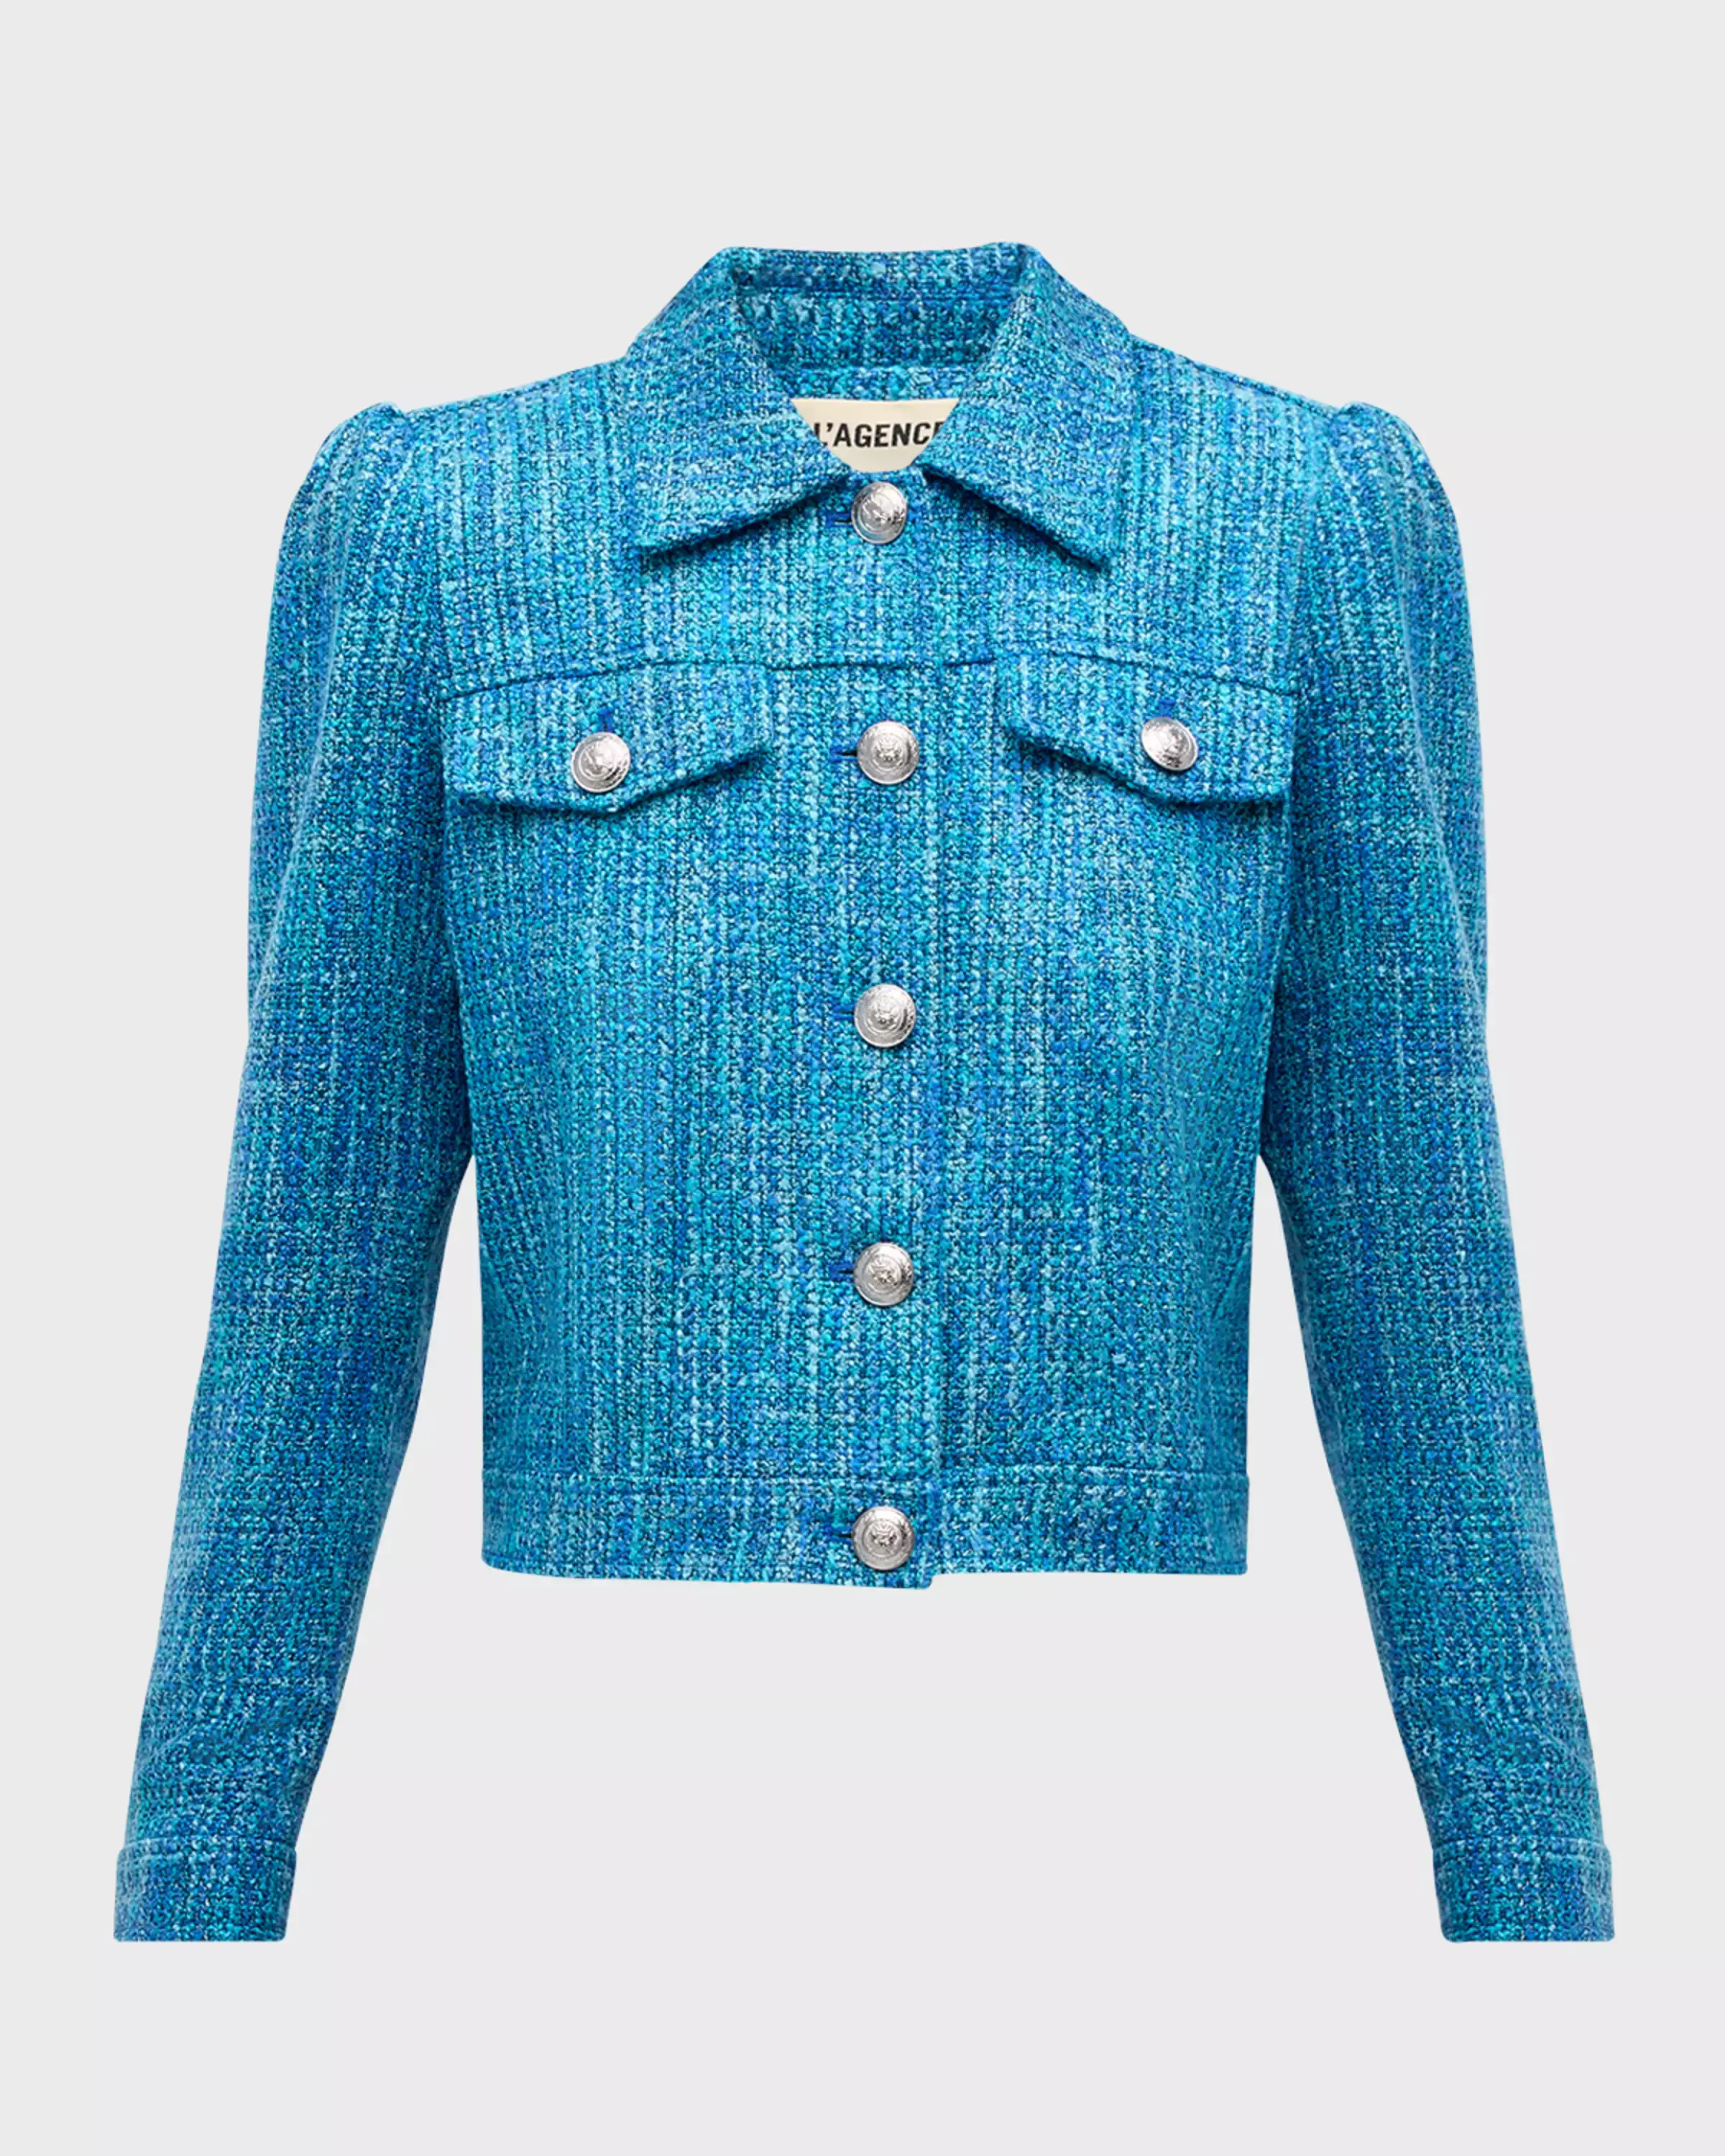 Lagence Kasey Tweed Jacket